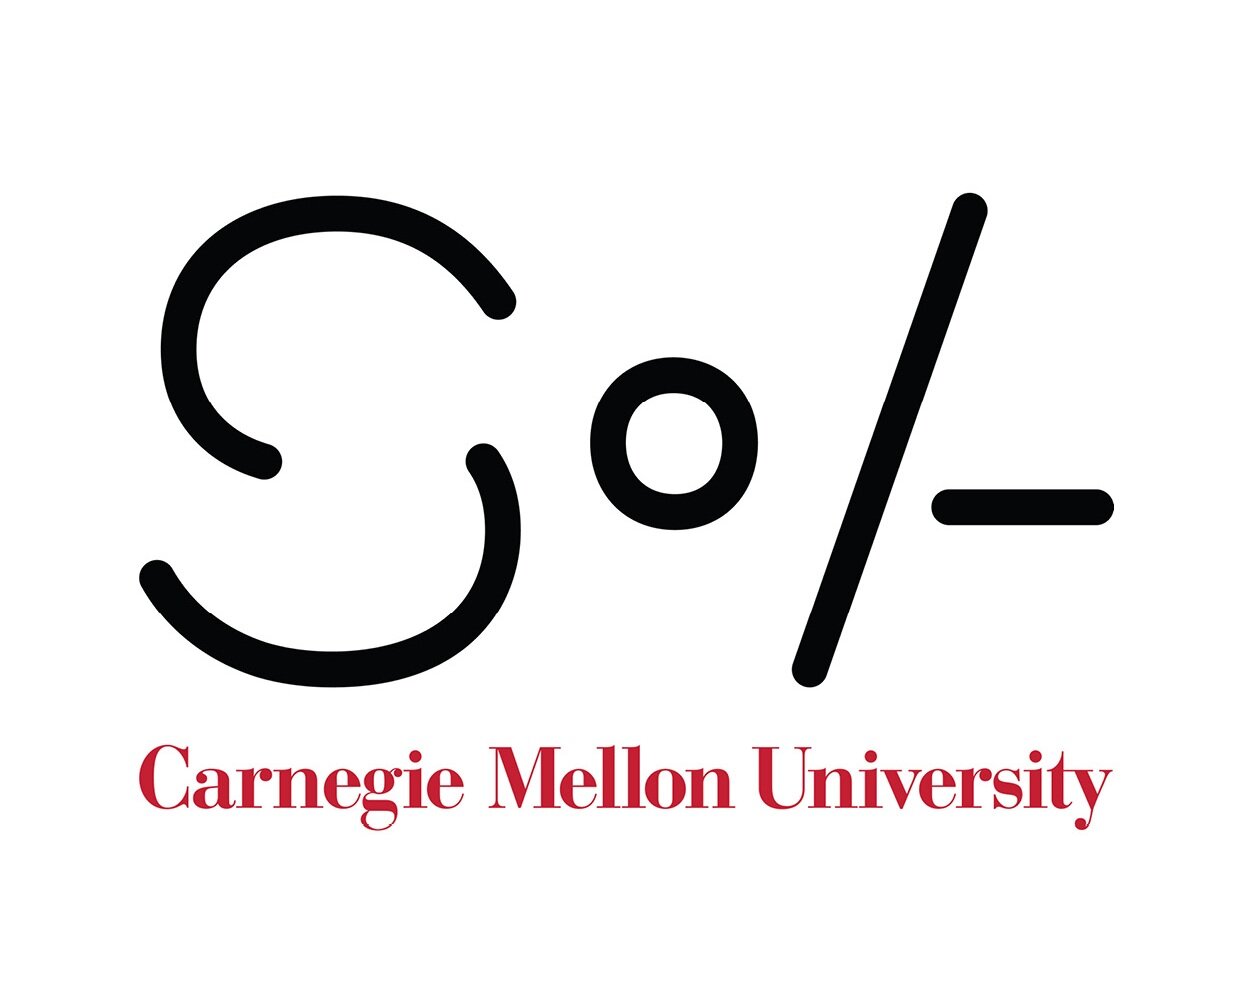 Christopher Klammer - The Robotics Institute Carnegie Mellon University